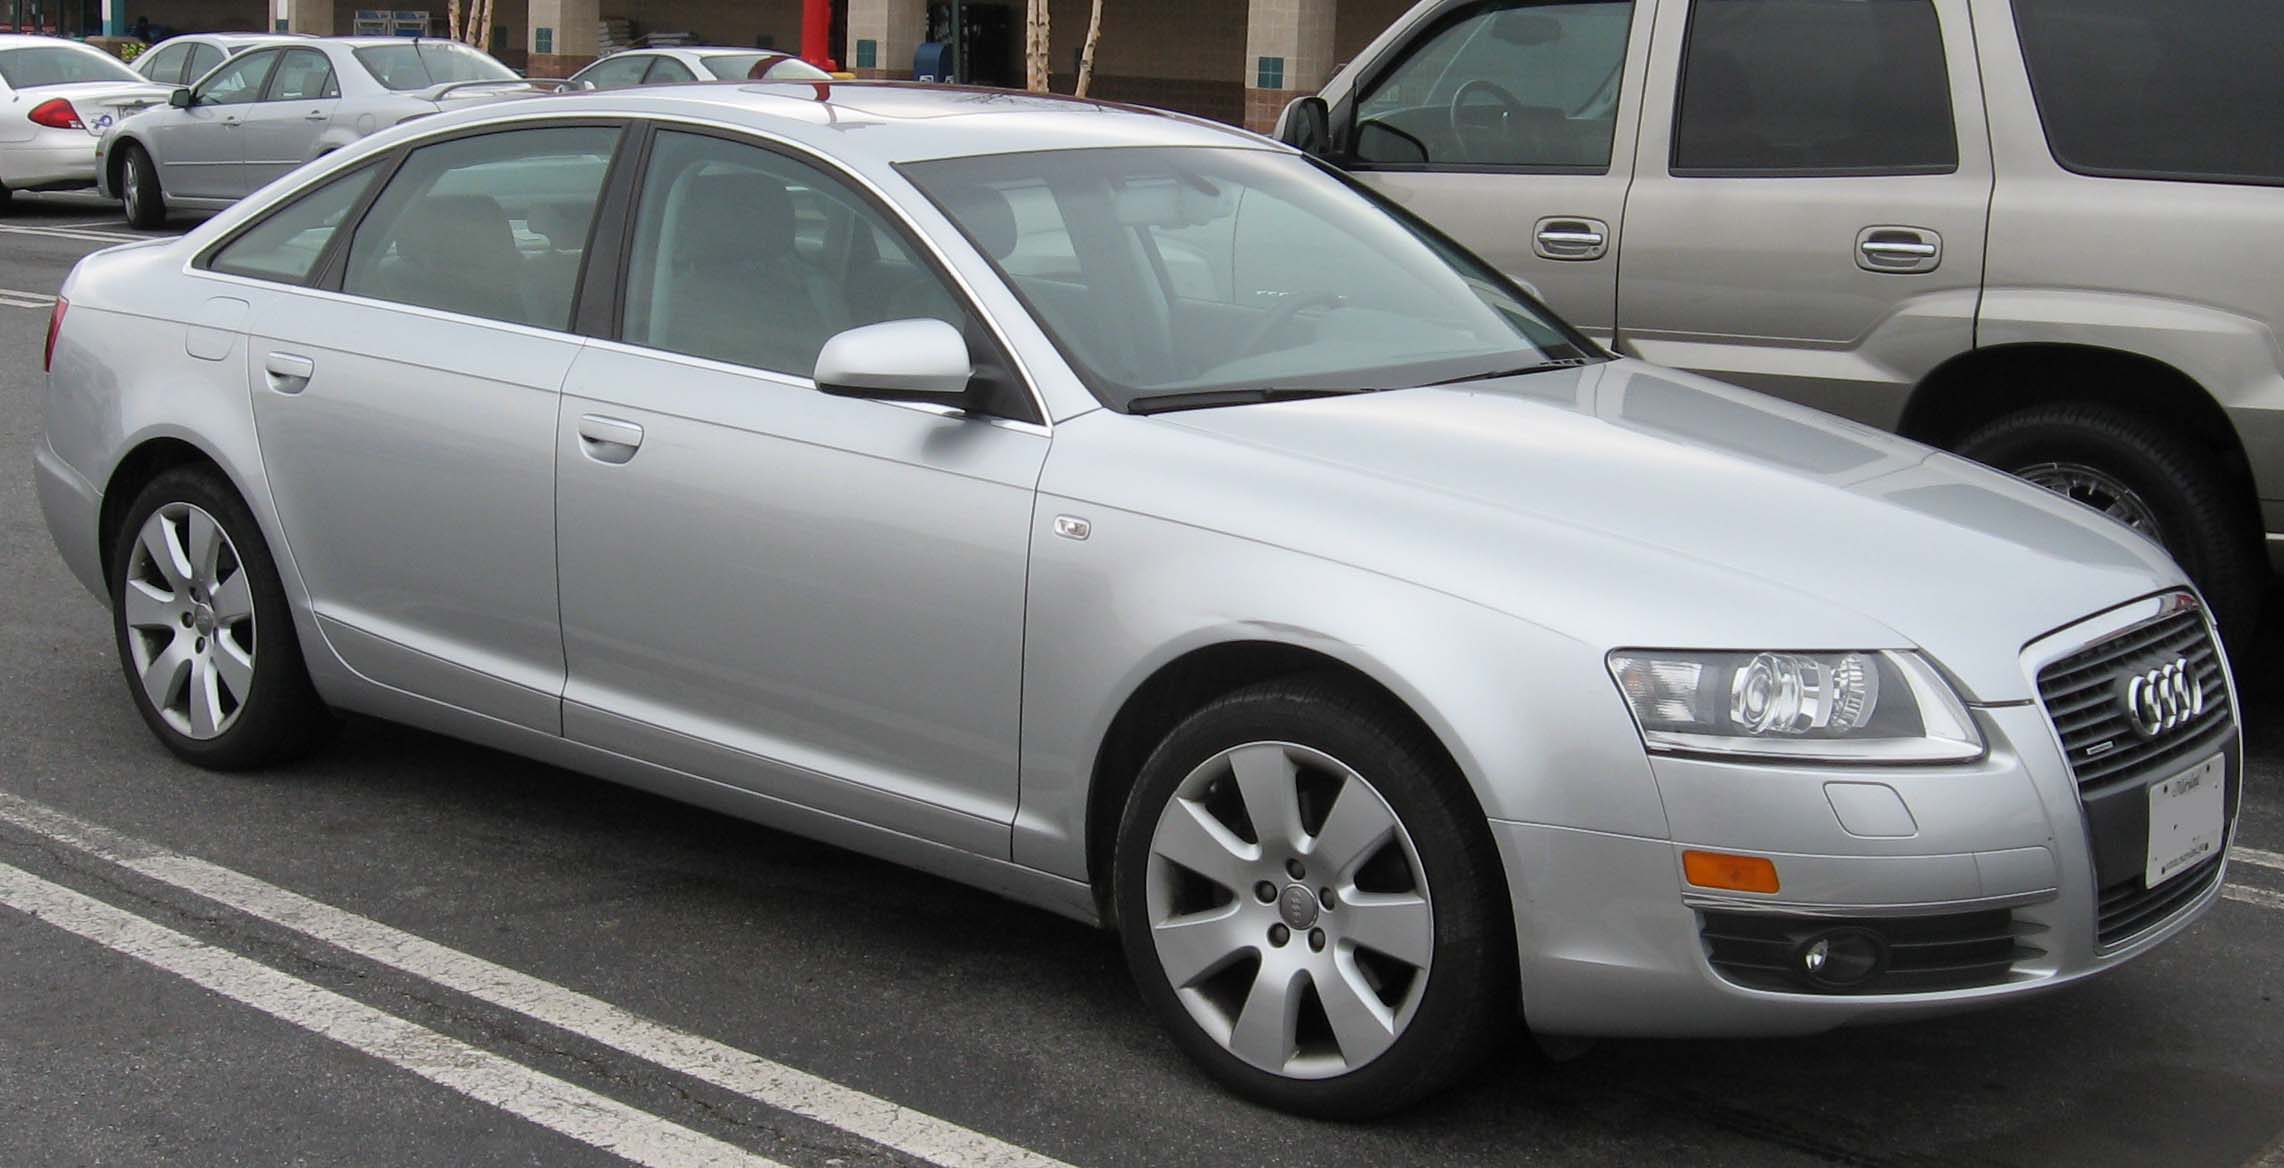 File:Audi-A6-3.2-2.jpg - Wikimedia Commons